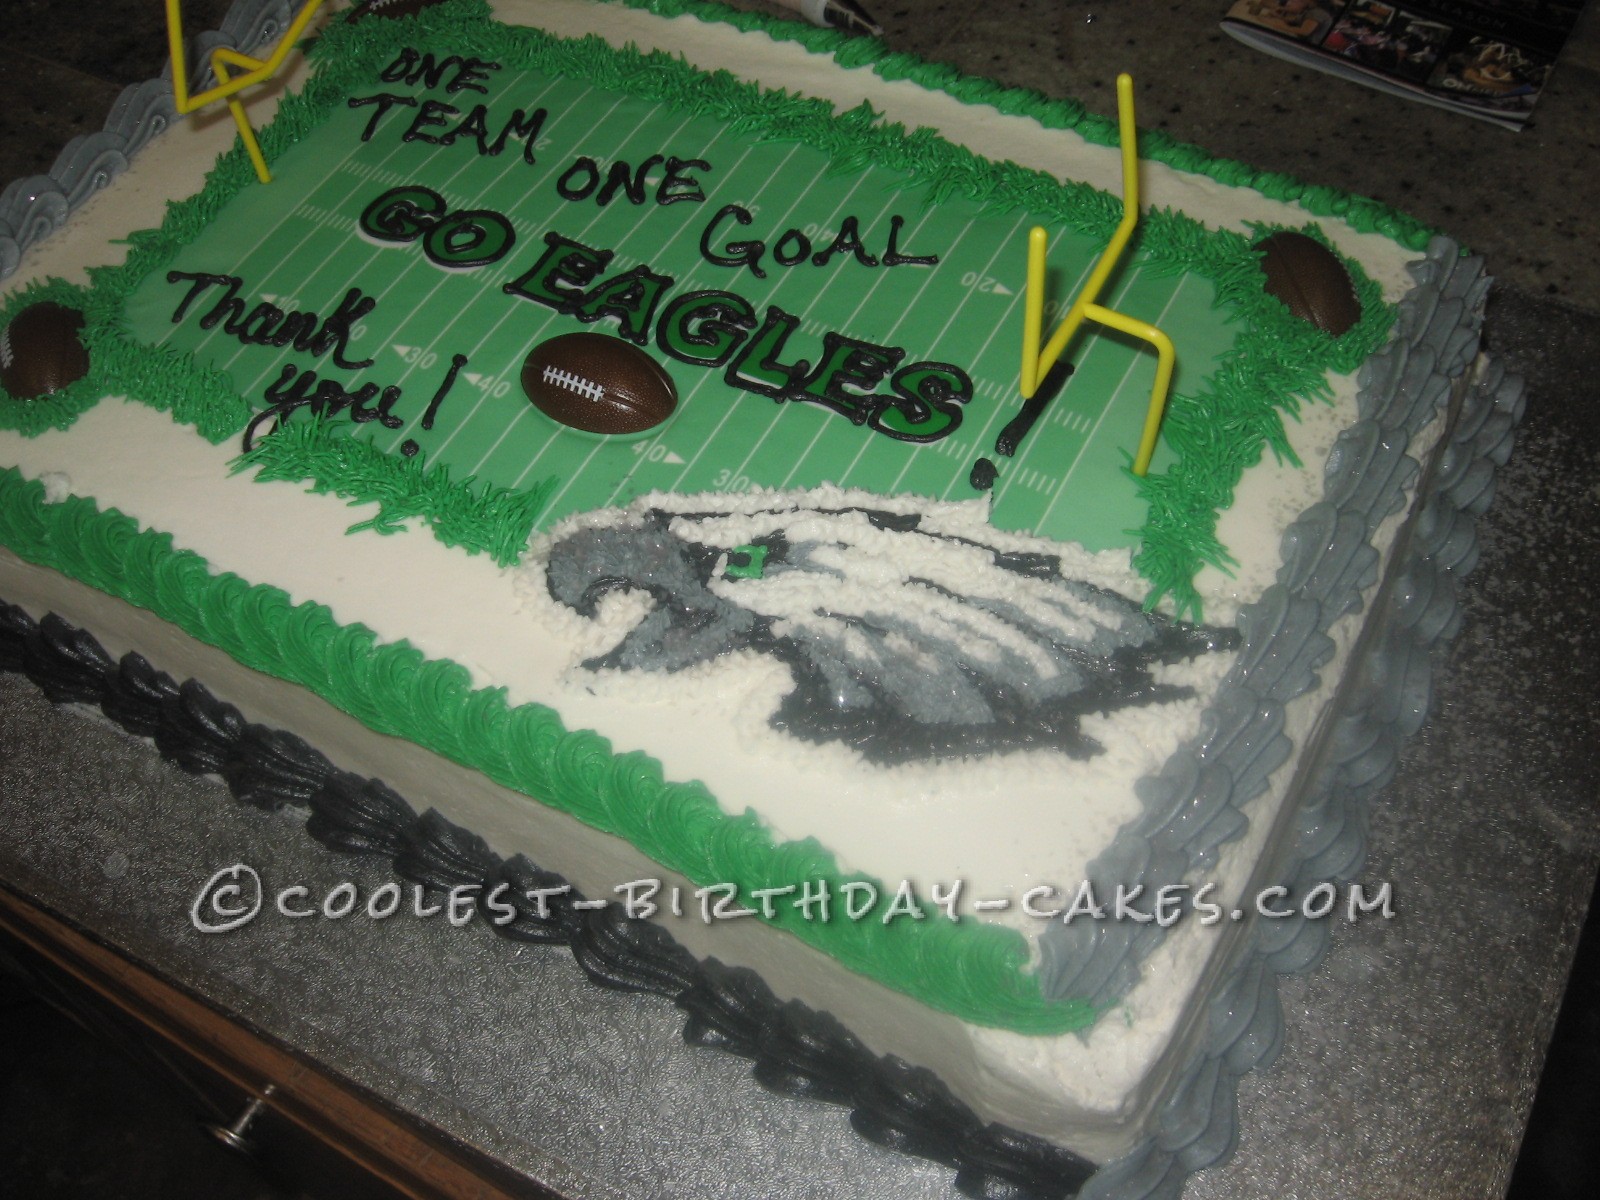 One Team One Goal, Go Eagles Cake